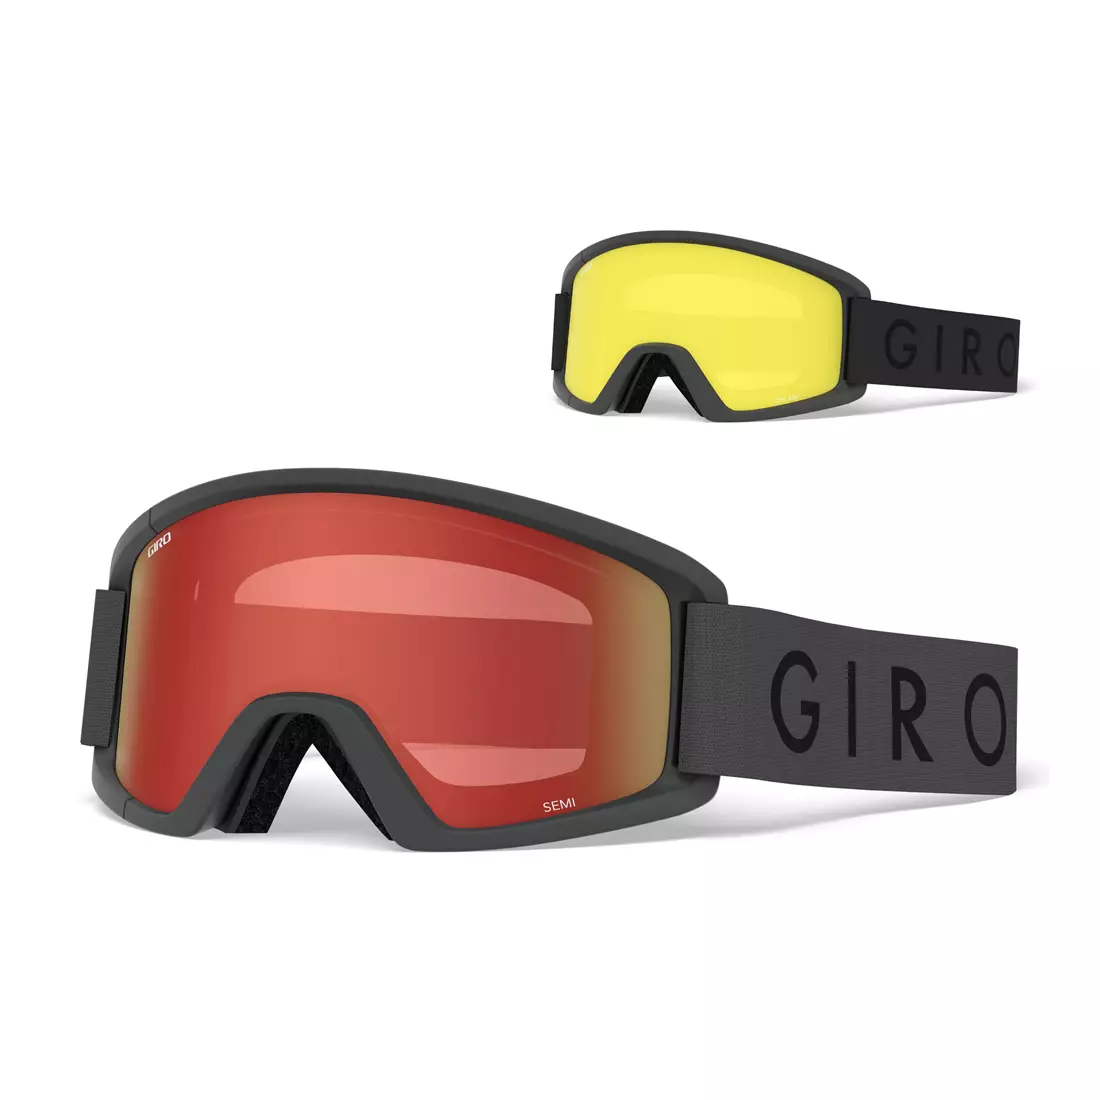 Ski / snowboard goggles GIRO SEMI GREY CORE GR-7102611